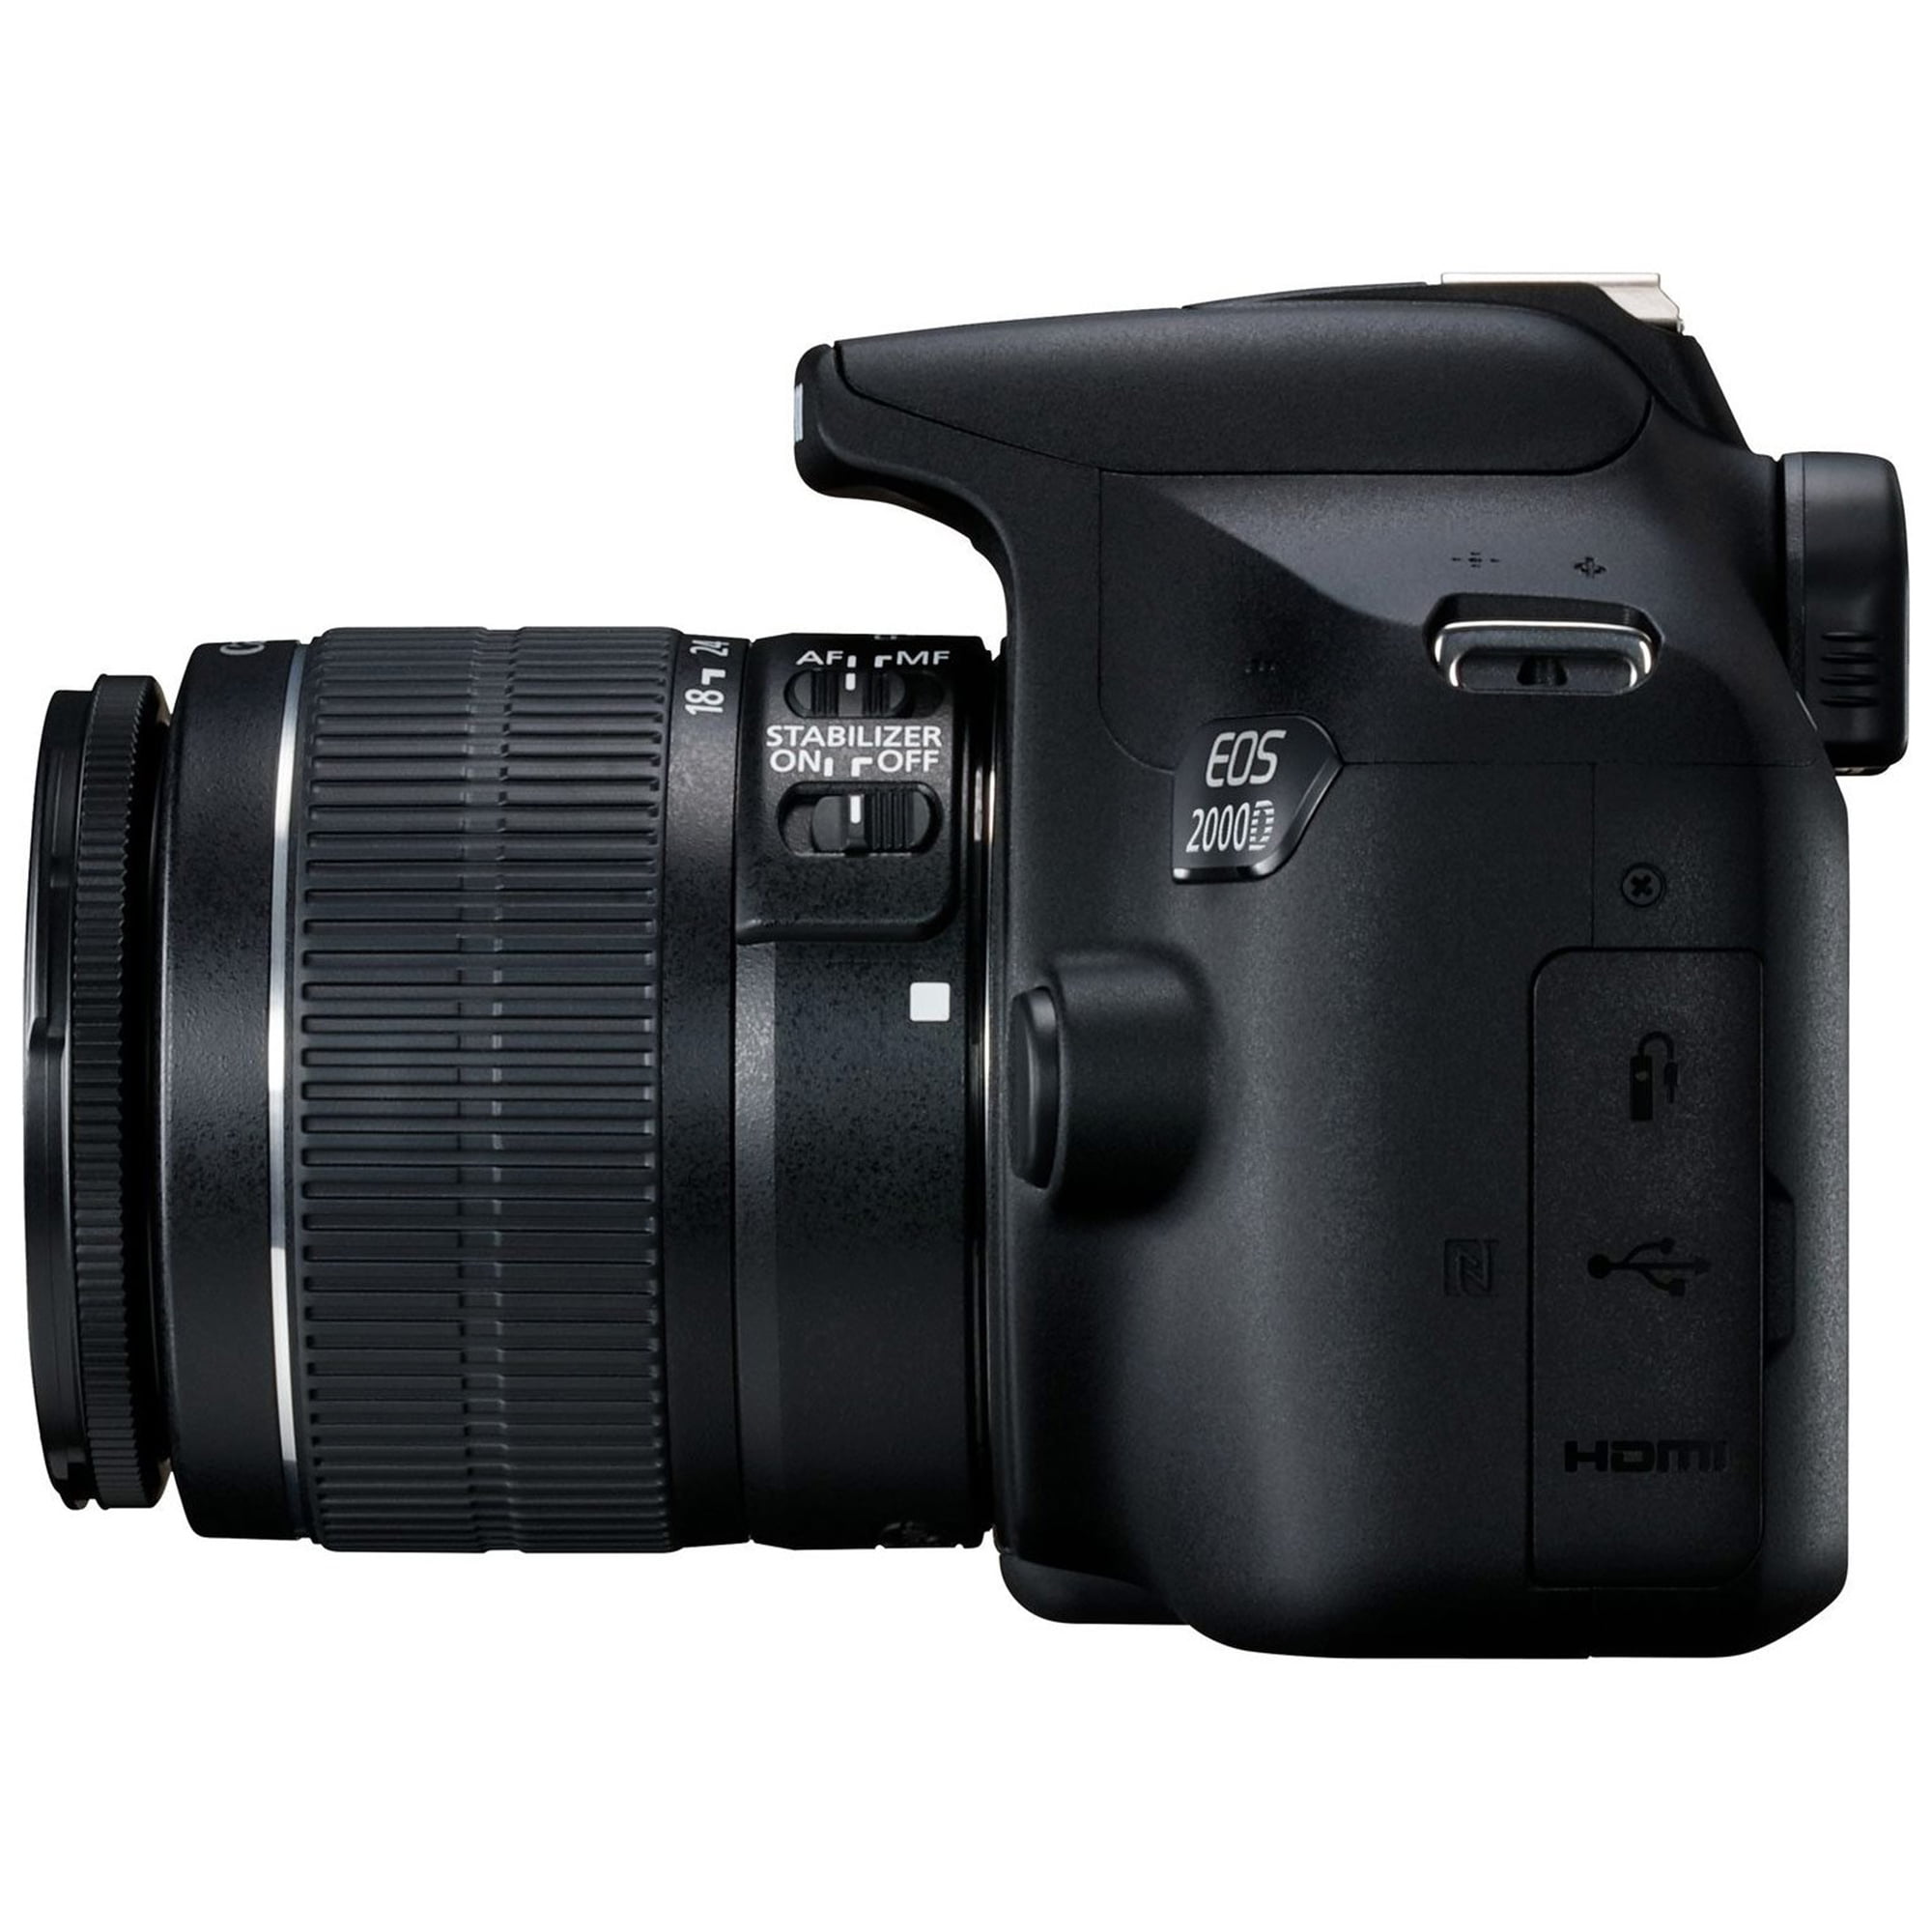 Canon EOS 2000D DSLR: Capture Stunning Images & Videos